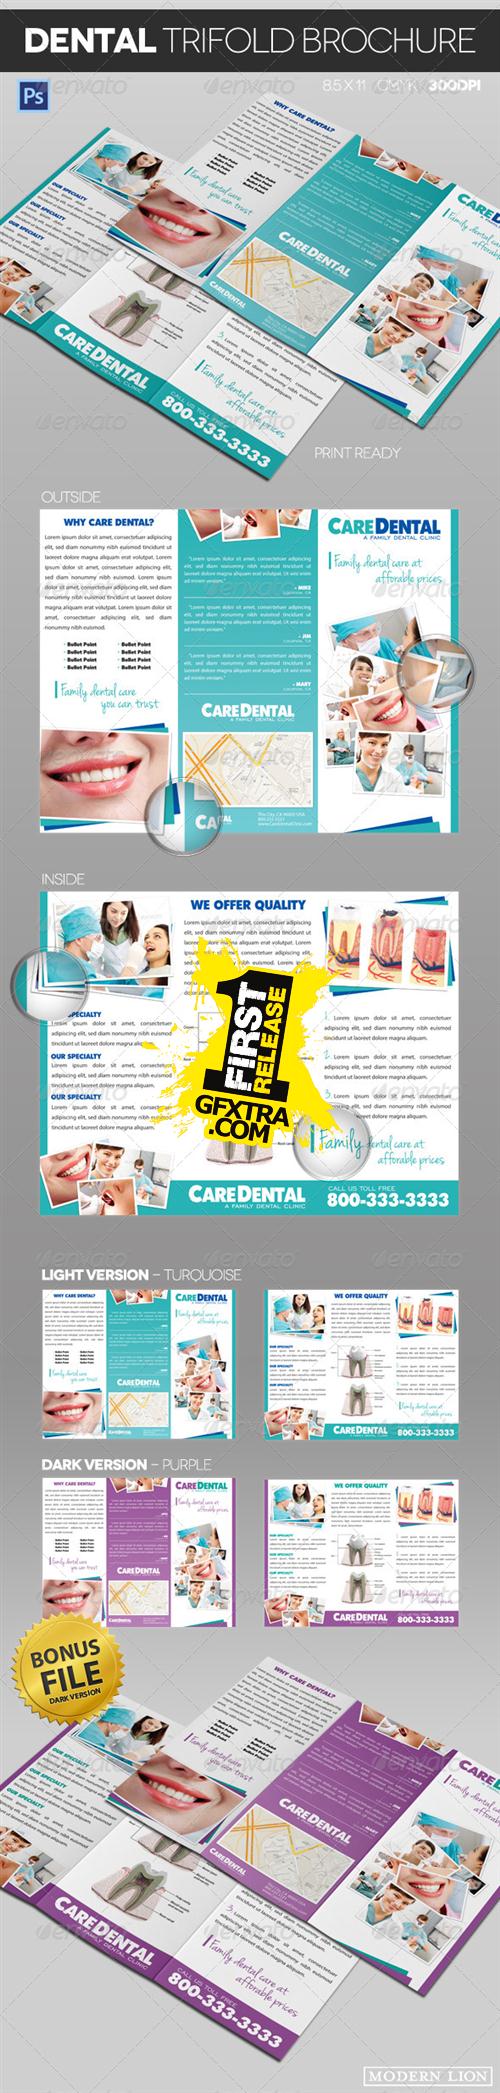 GraphicRiver - Dental Trifold Brochure